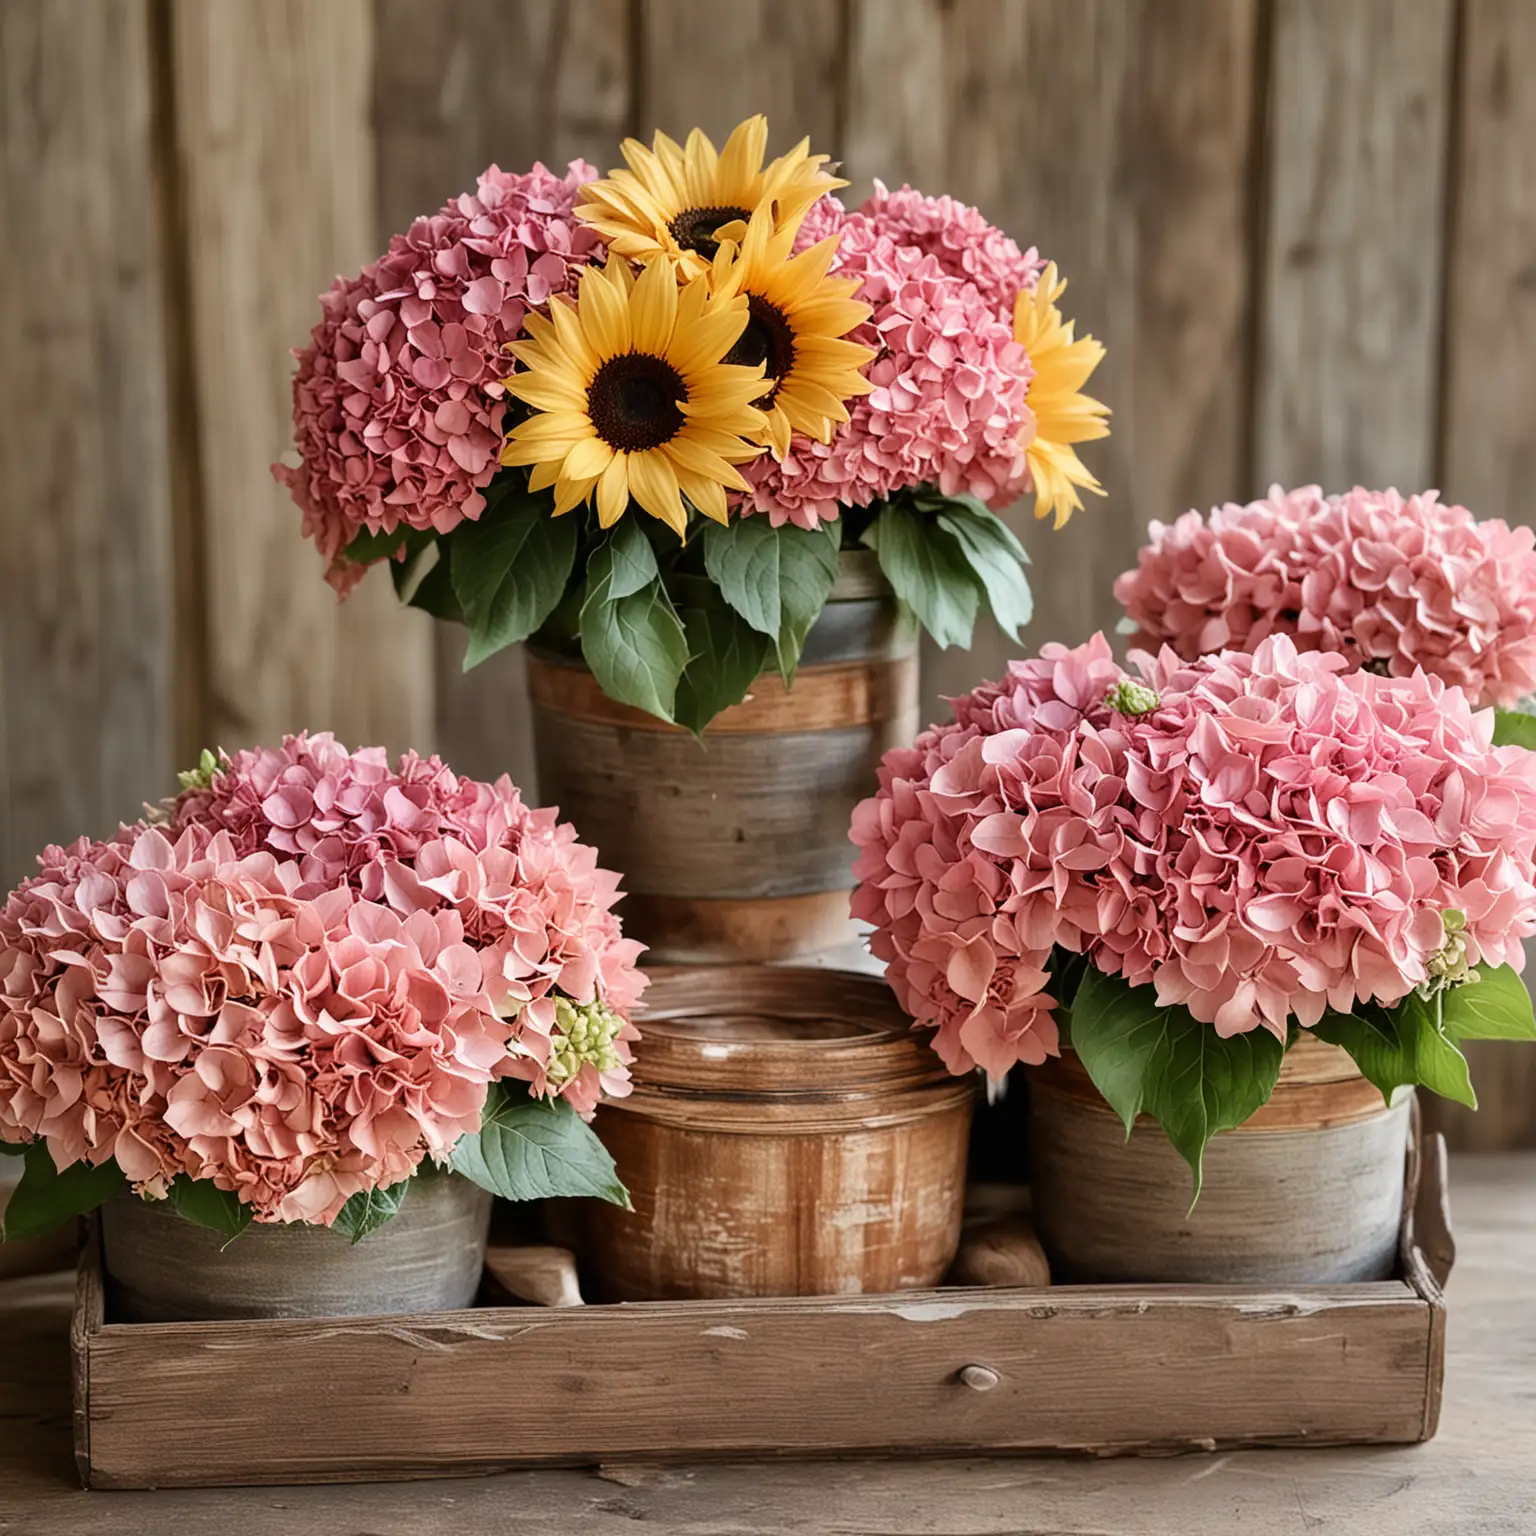 Rustic-Sunflower-and-Pink-Hydrangea-Centerpiece-Charming-Floral-Arrangement